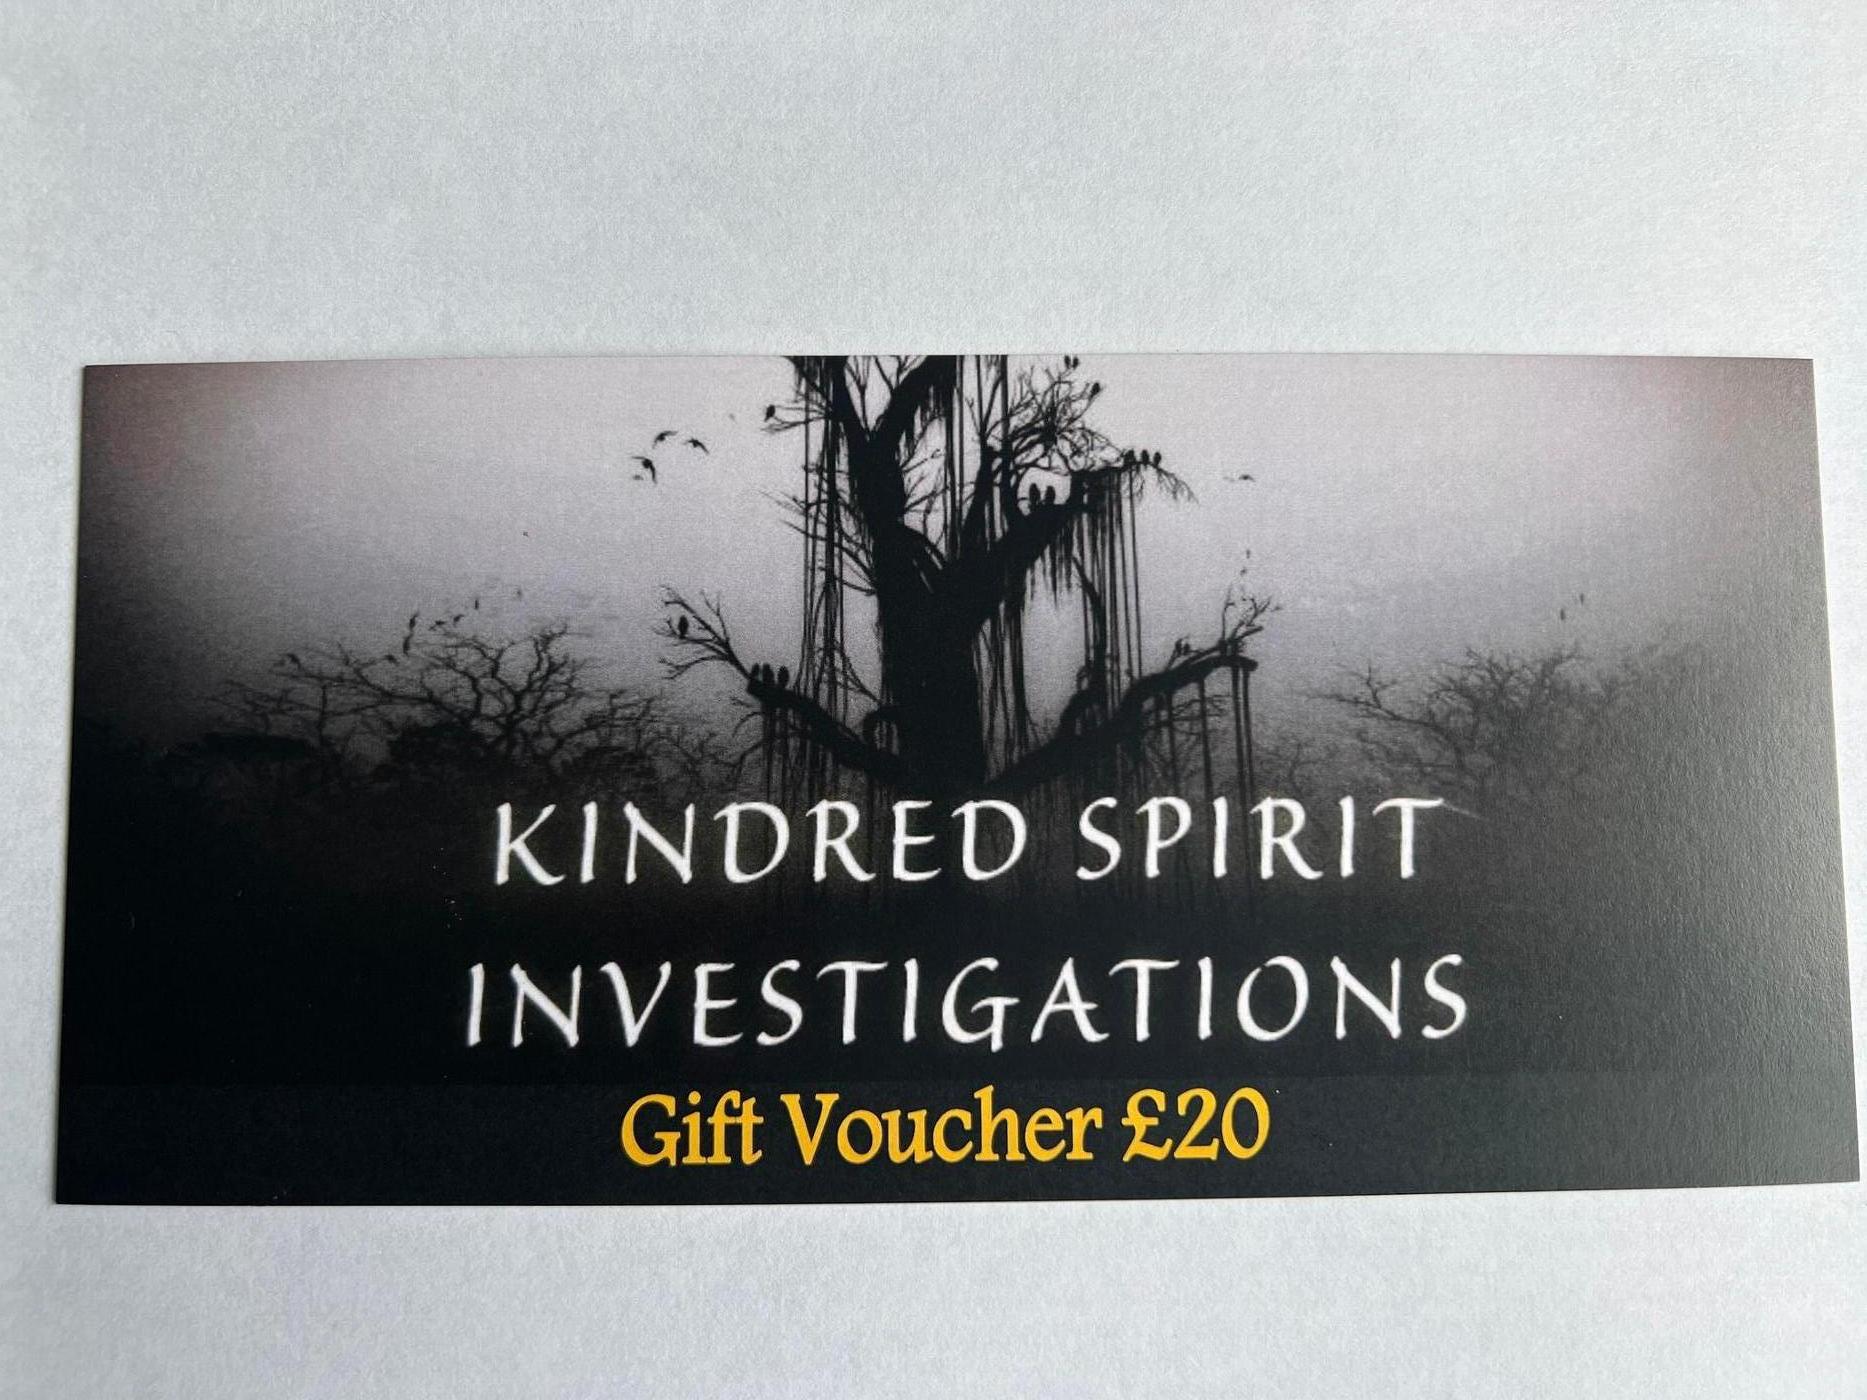 Kindred Spirit Investigations £20 Gift Voucher